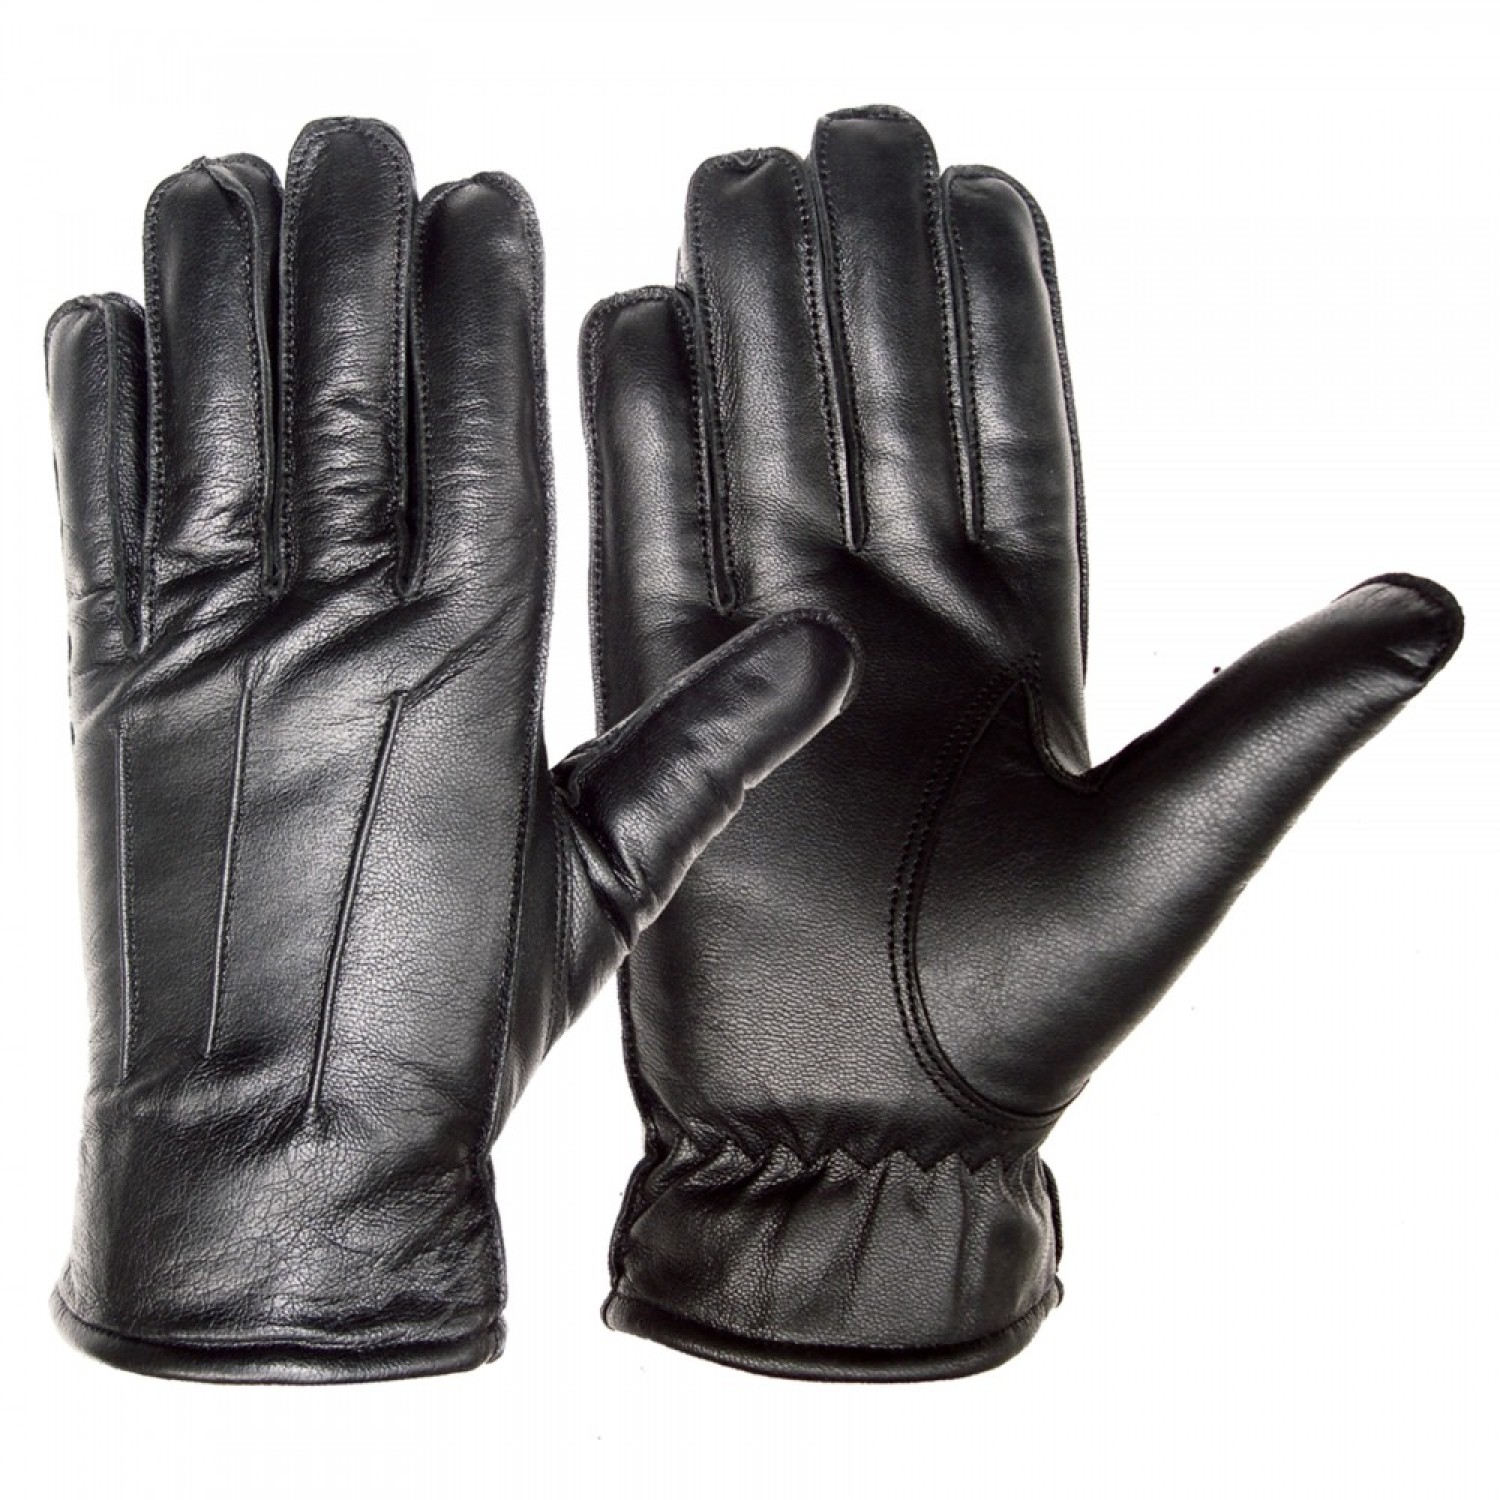 Black high quality Leather Fashion Gloves